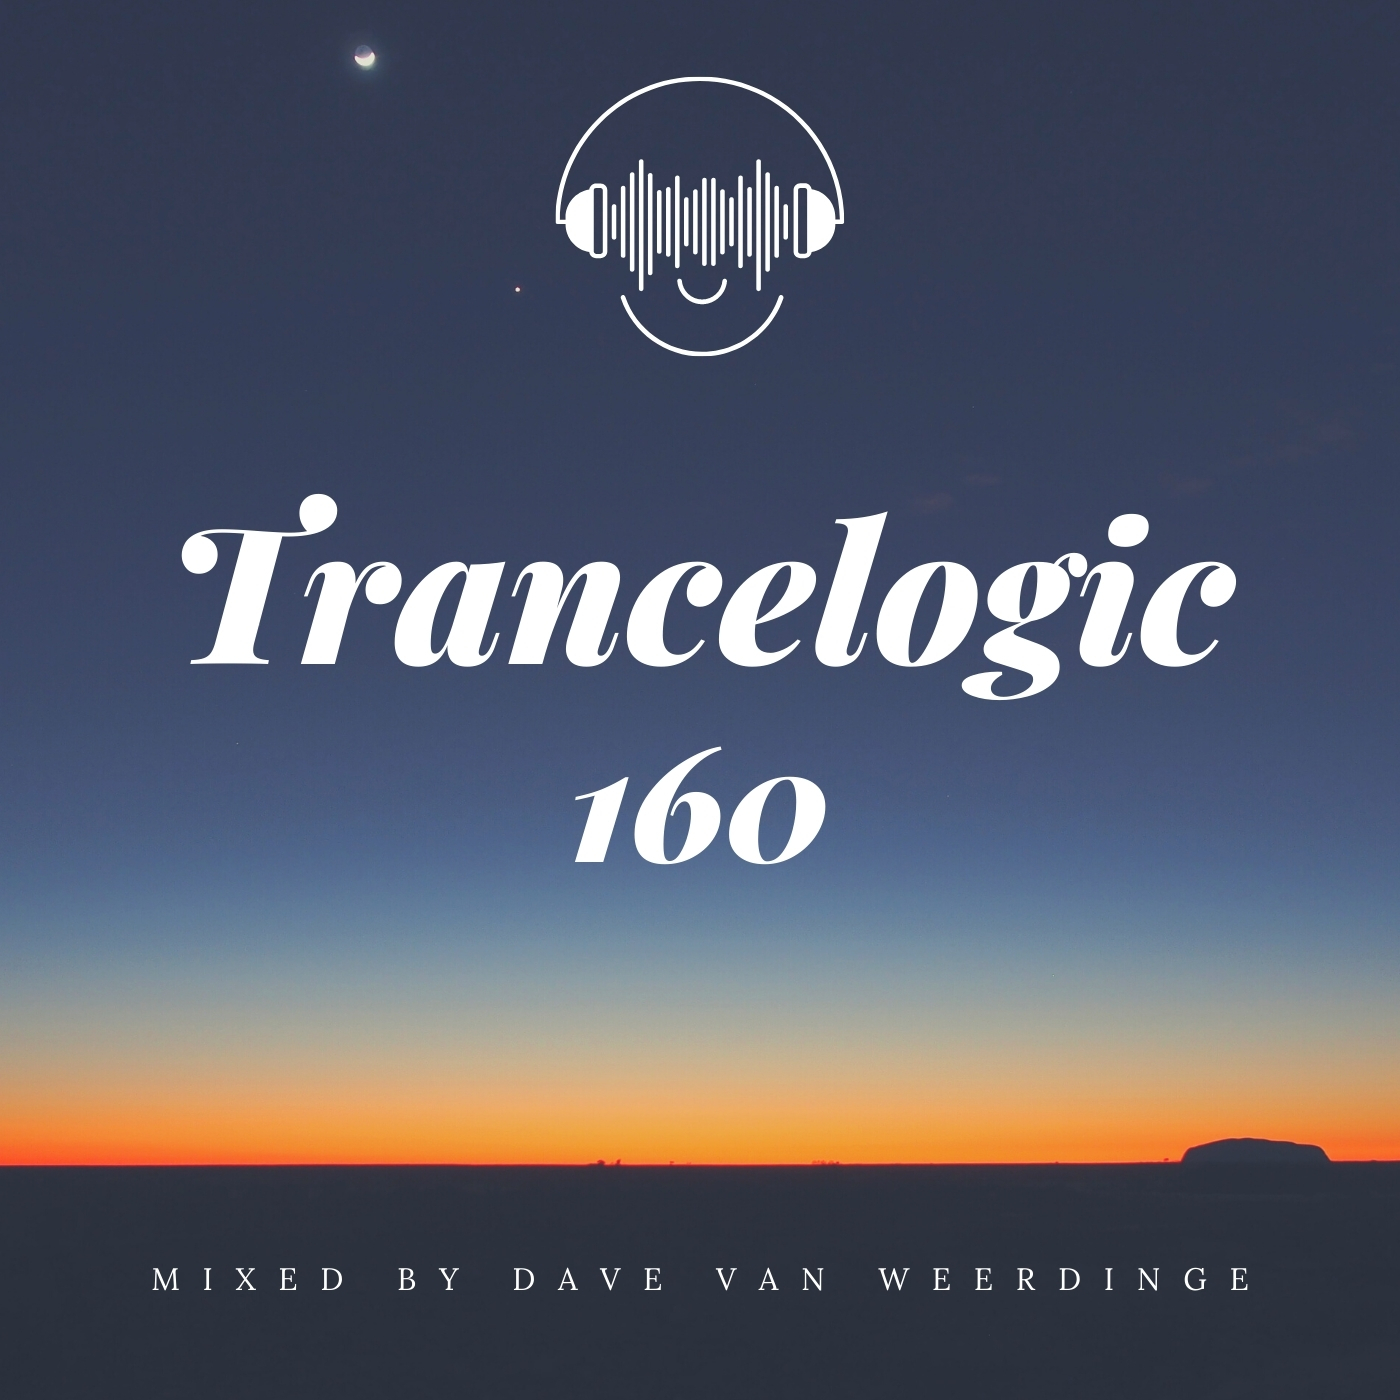 Trancelogic 160 by Dave van Weerdinge